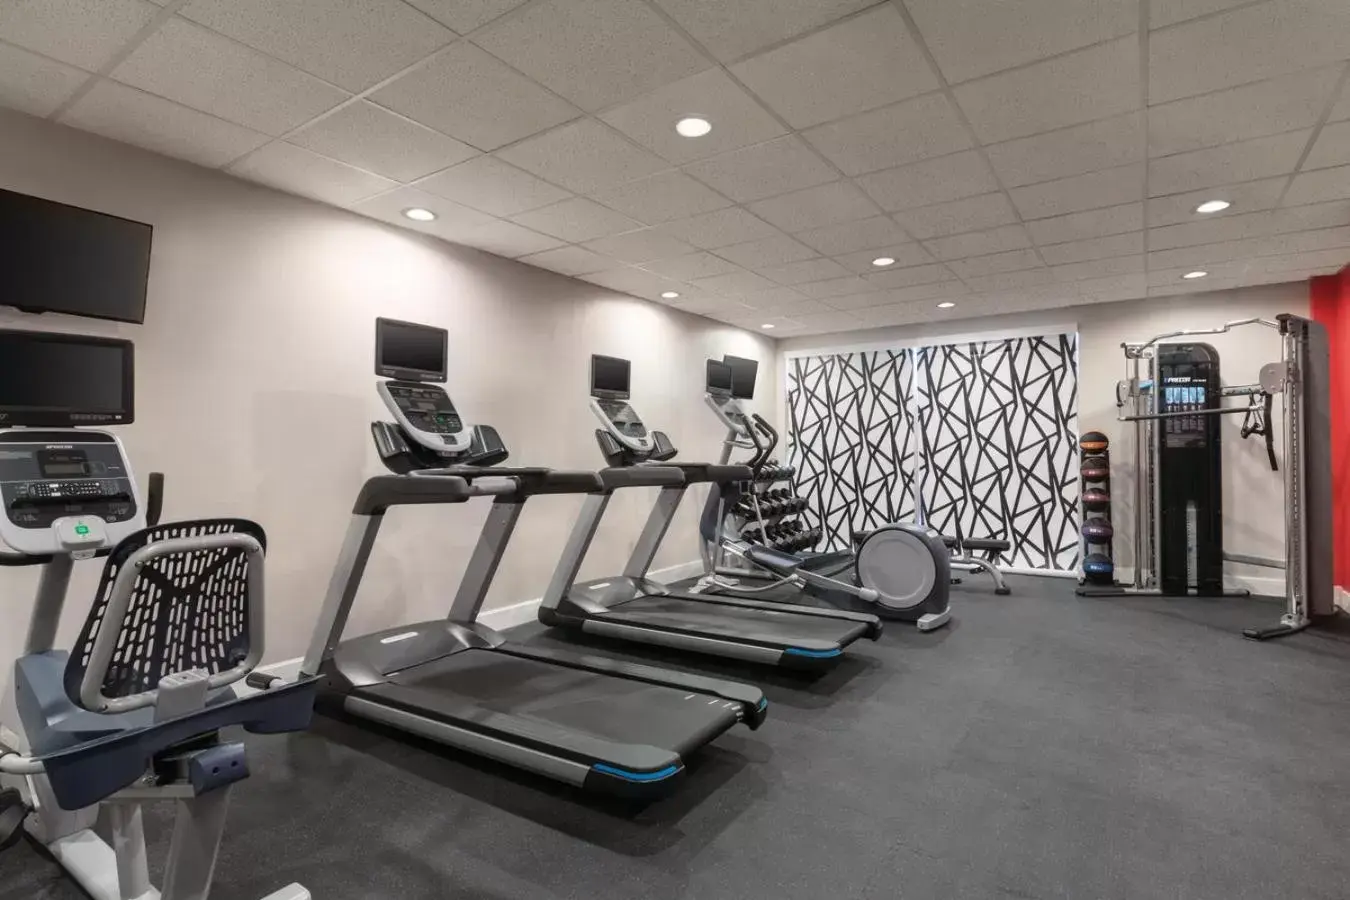 Fitness centre/facilities, Fitness Center/Facilities in Radisson Hotel McAllen Airport